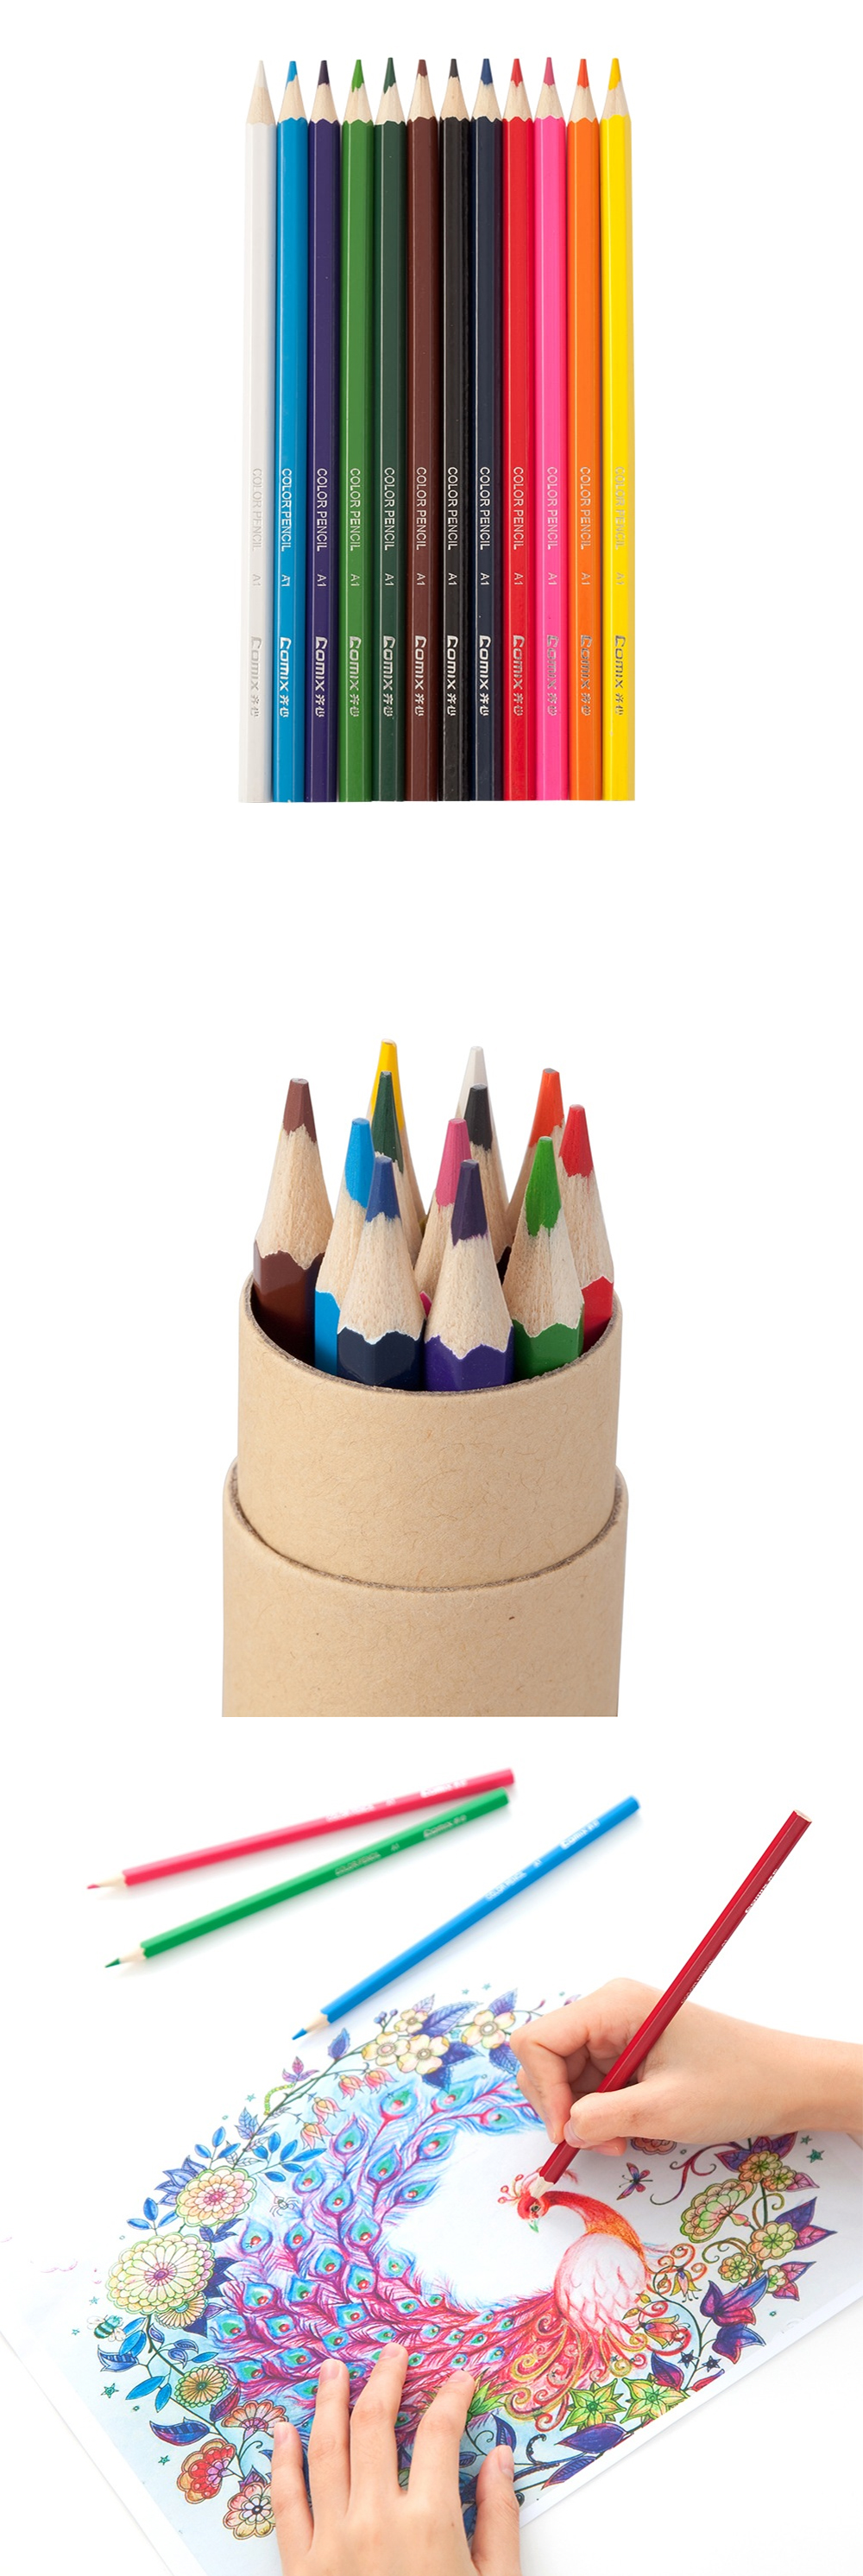 Comix-MP2019-48-Colors-Wood-Colored-Pencils-Painting-Drawing-Pencil-48-Pcsbarrel-Office-School-Suppl-1567506-4